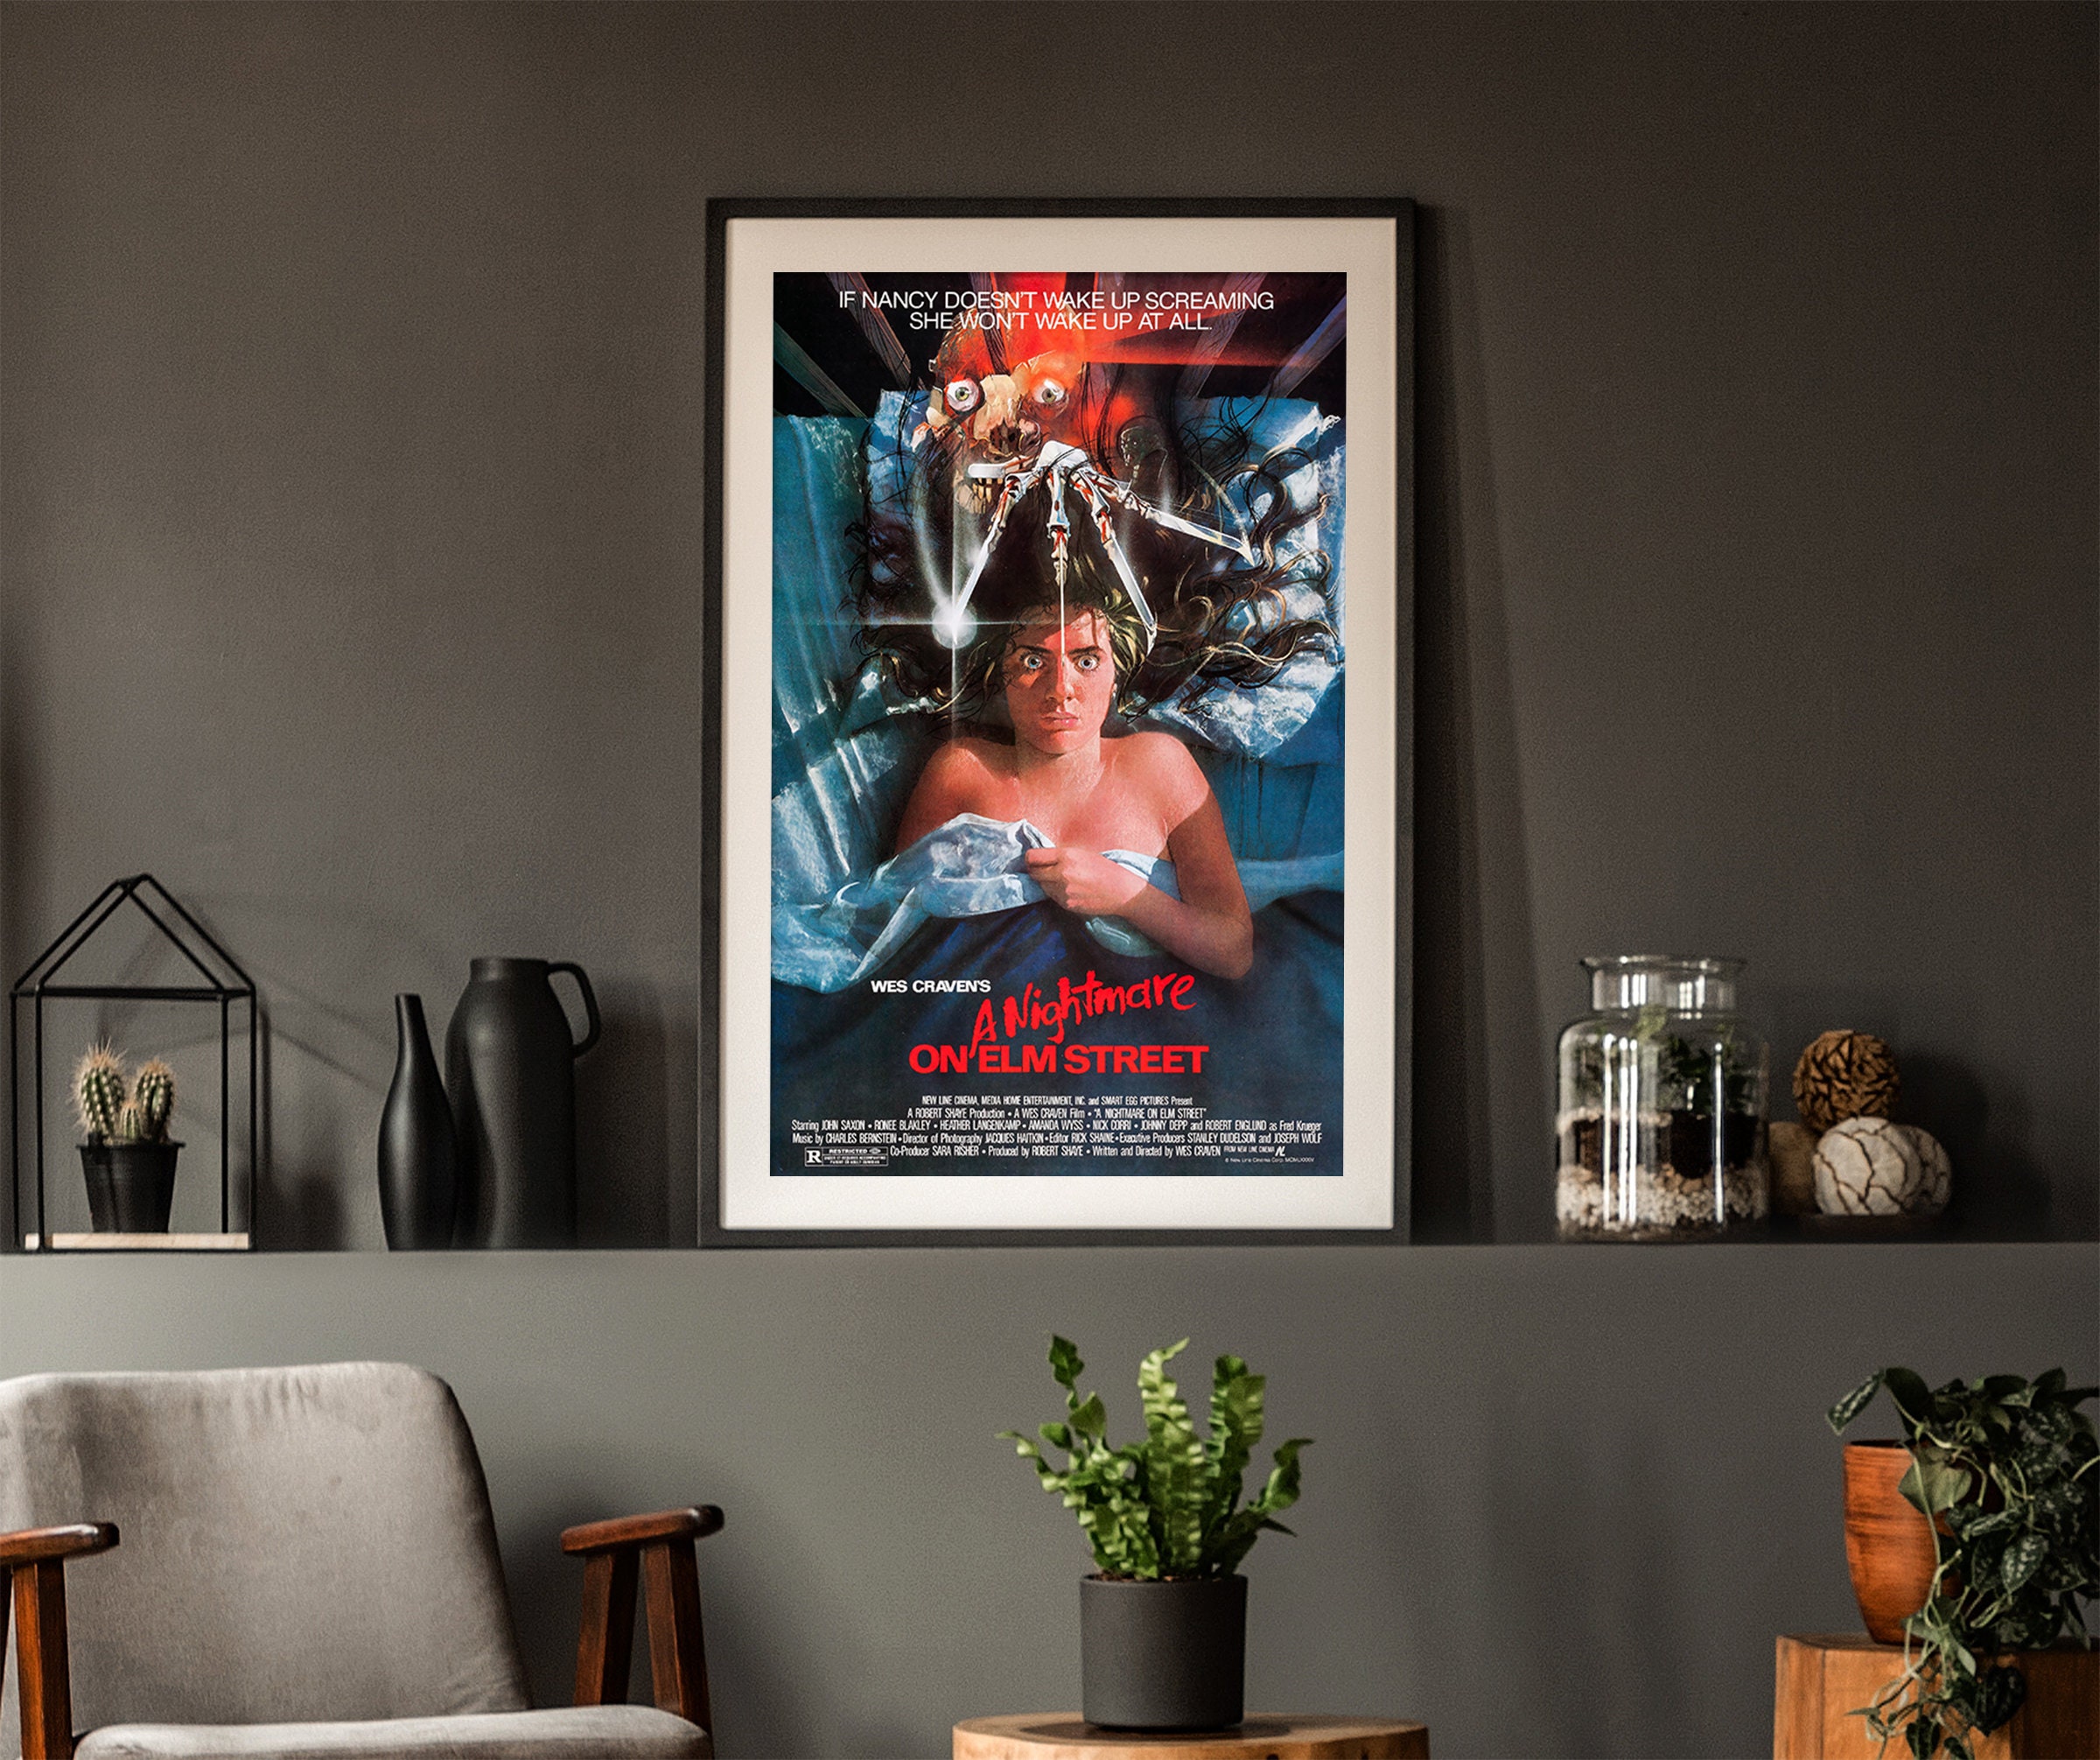 A Nightmare on Elm Street Movie Poster, Vintage Movie Poster